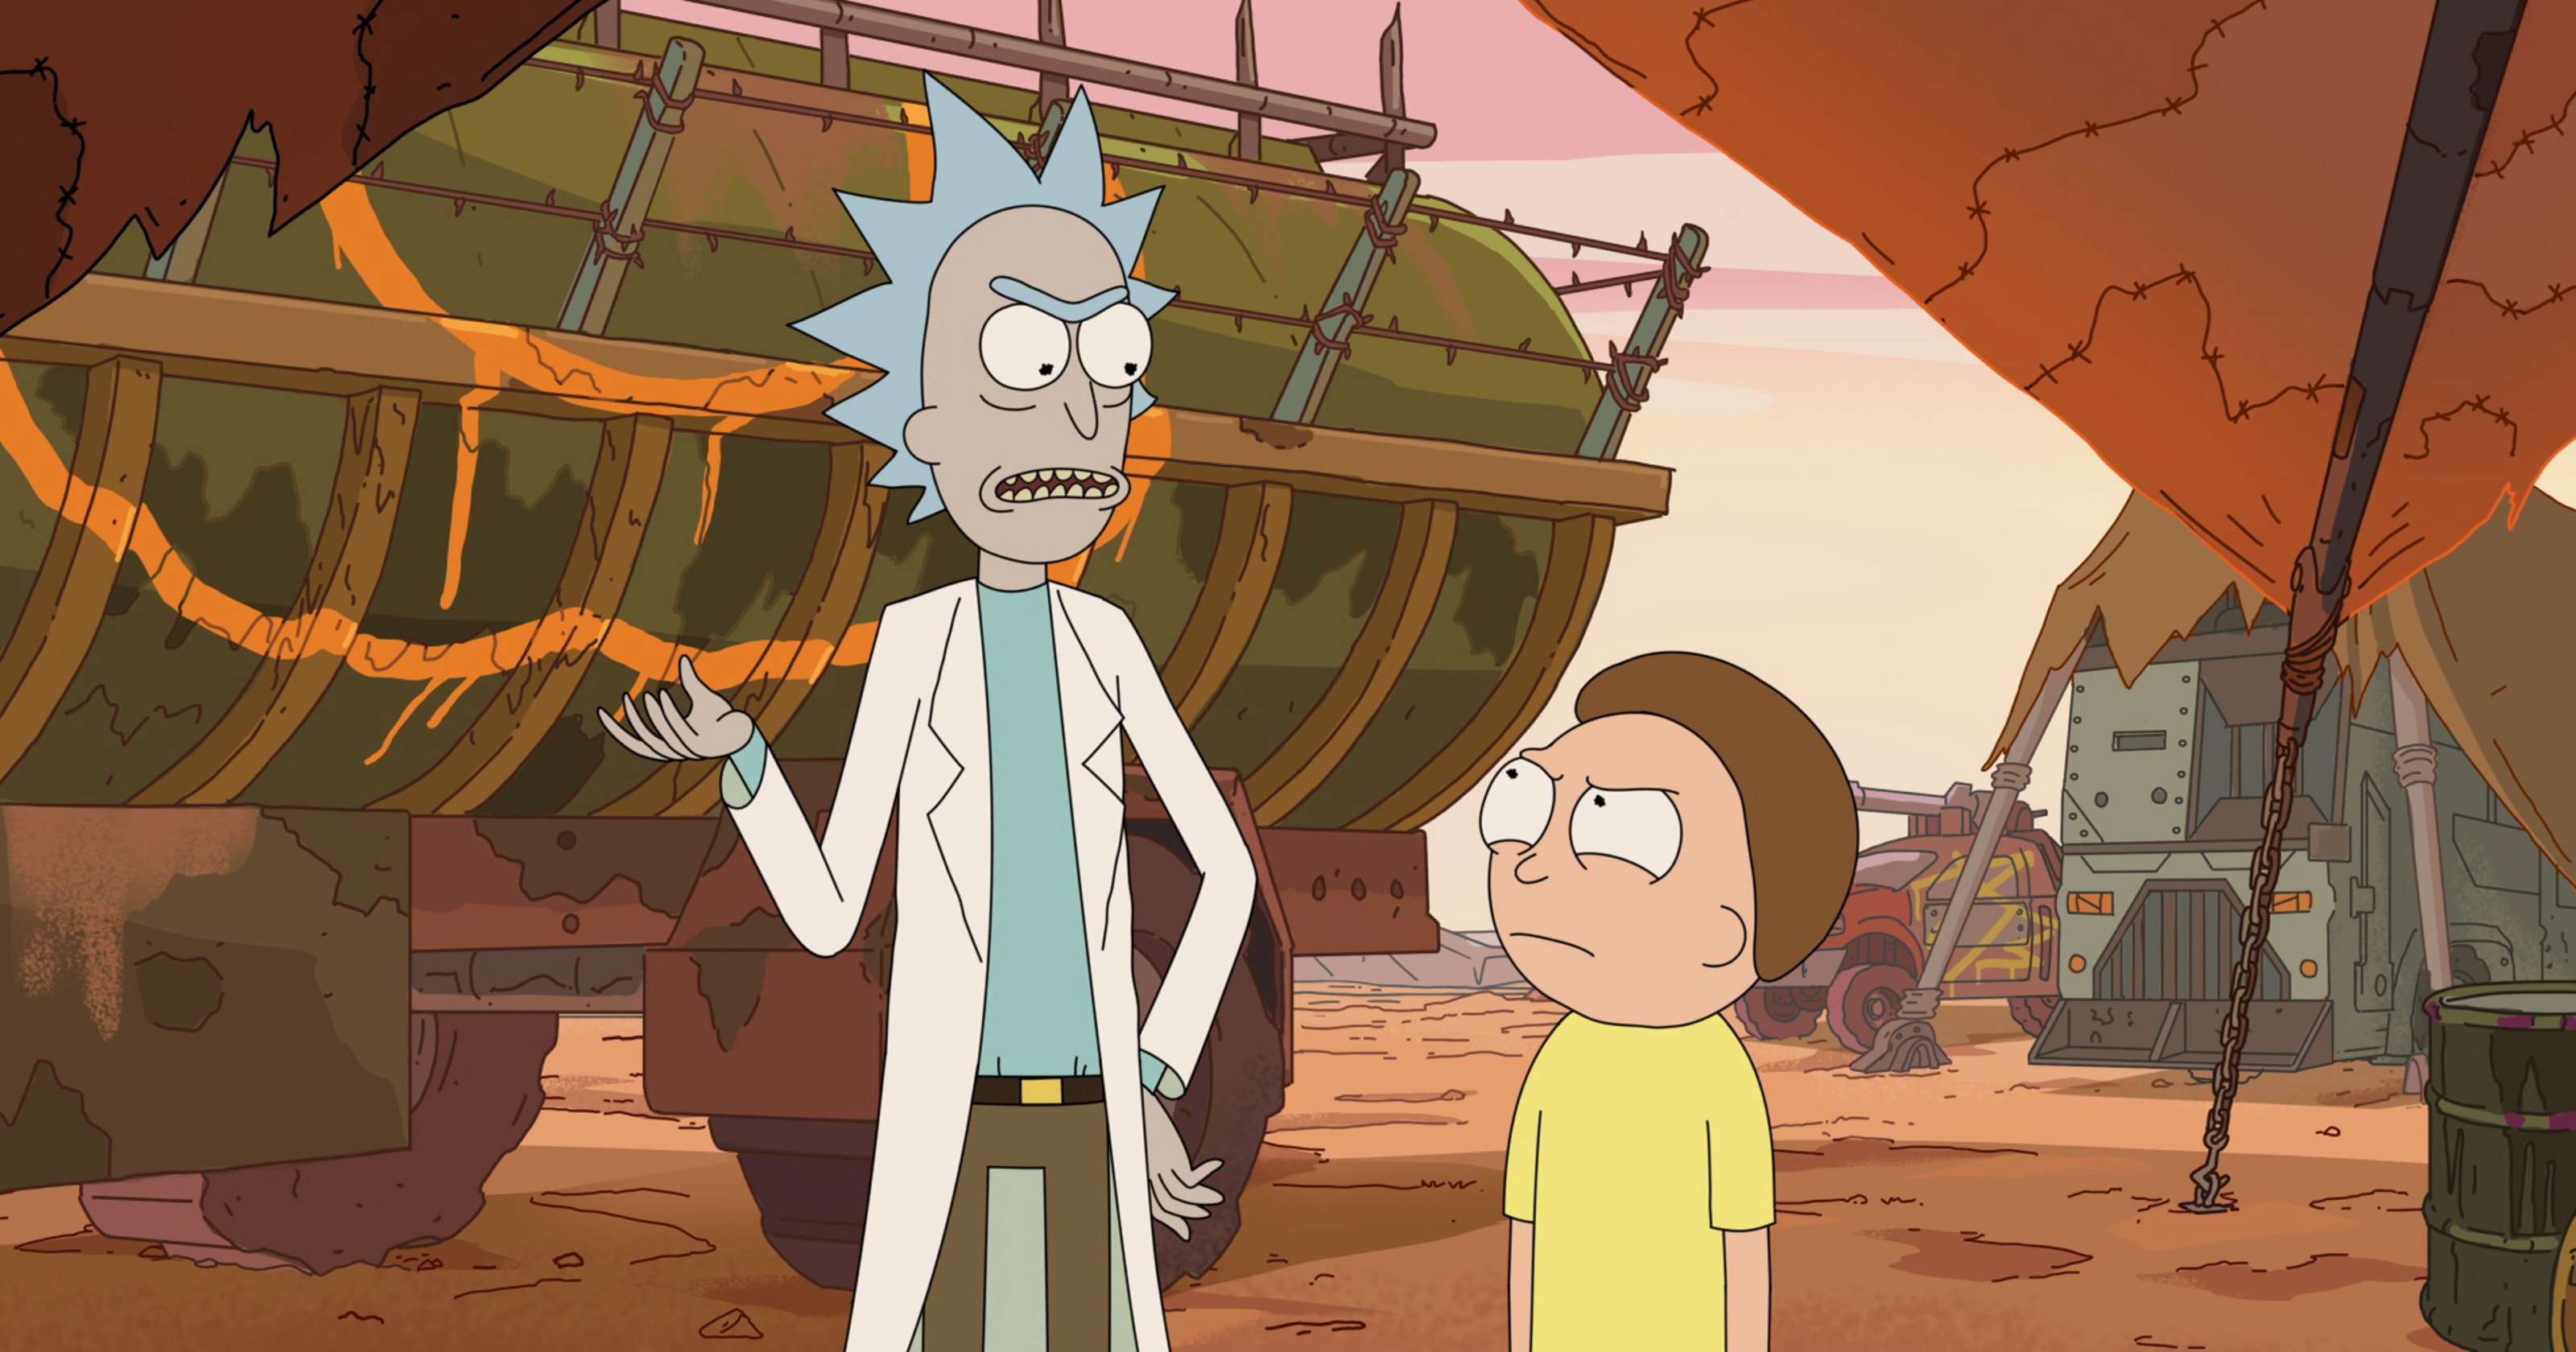 Fondos de pantalla Morty enojado con Rick